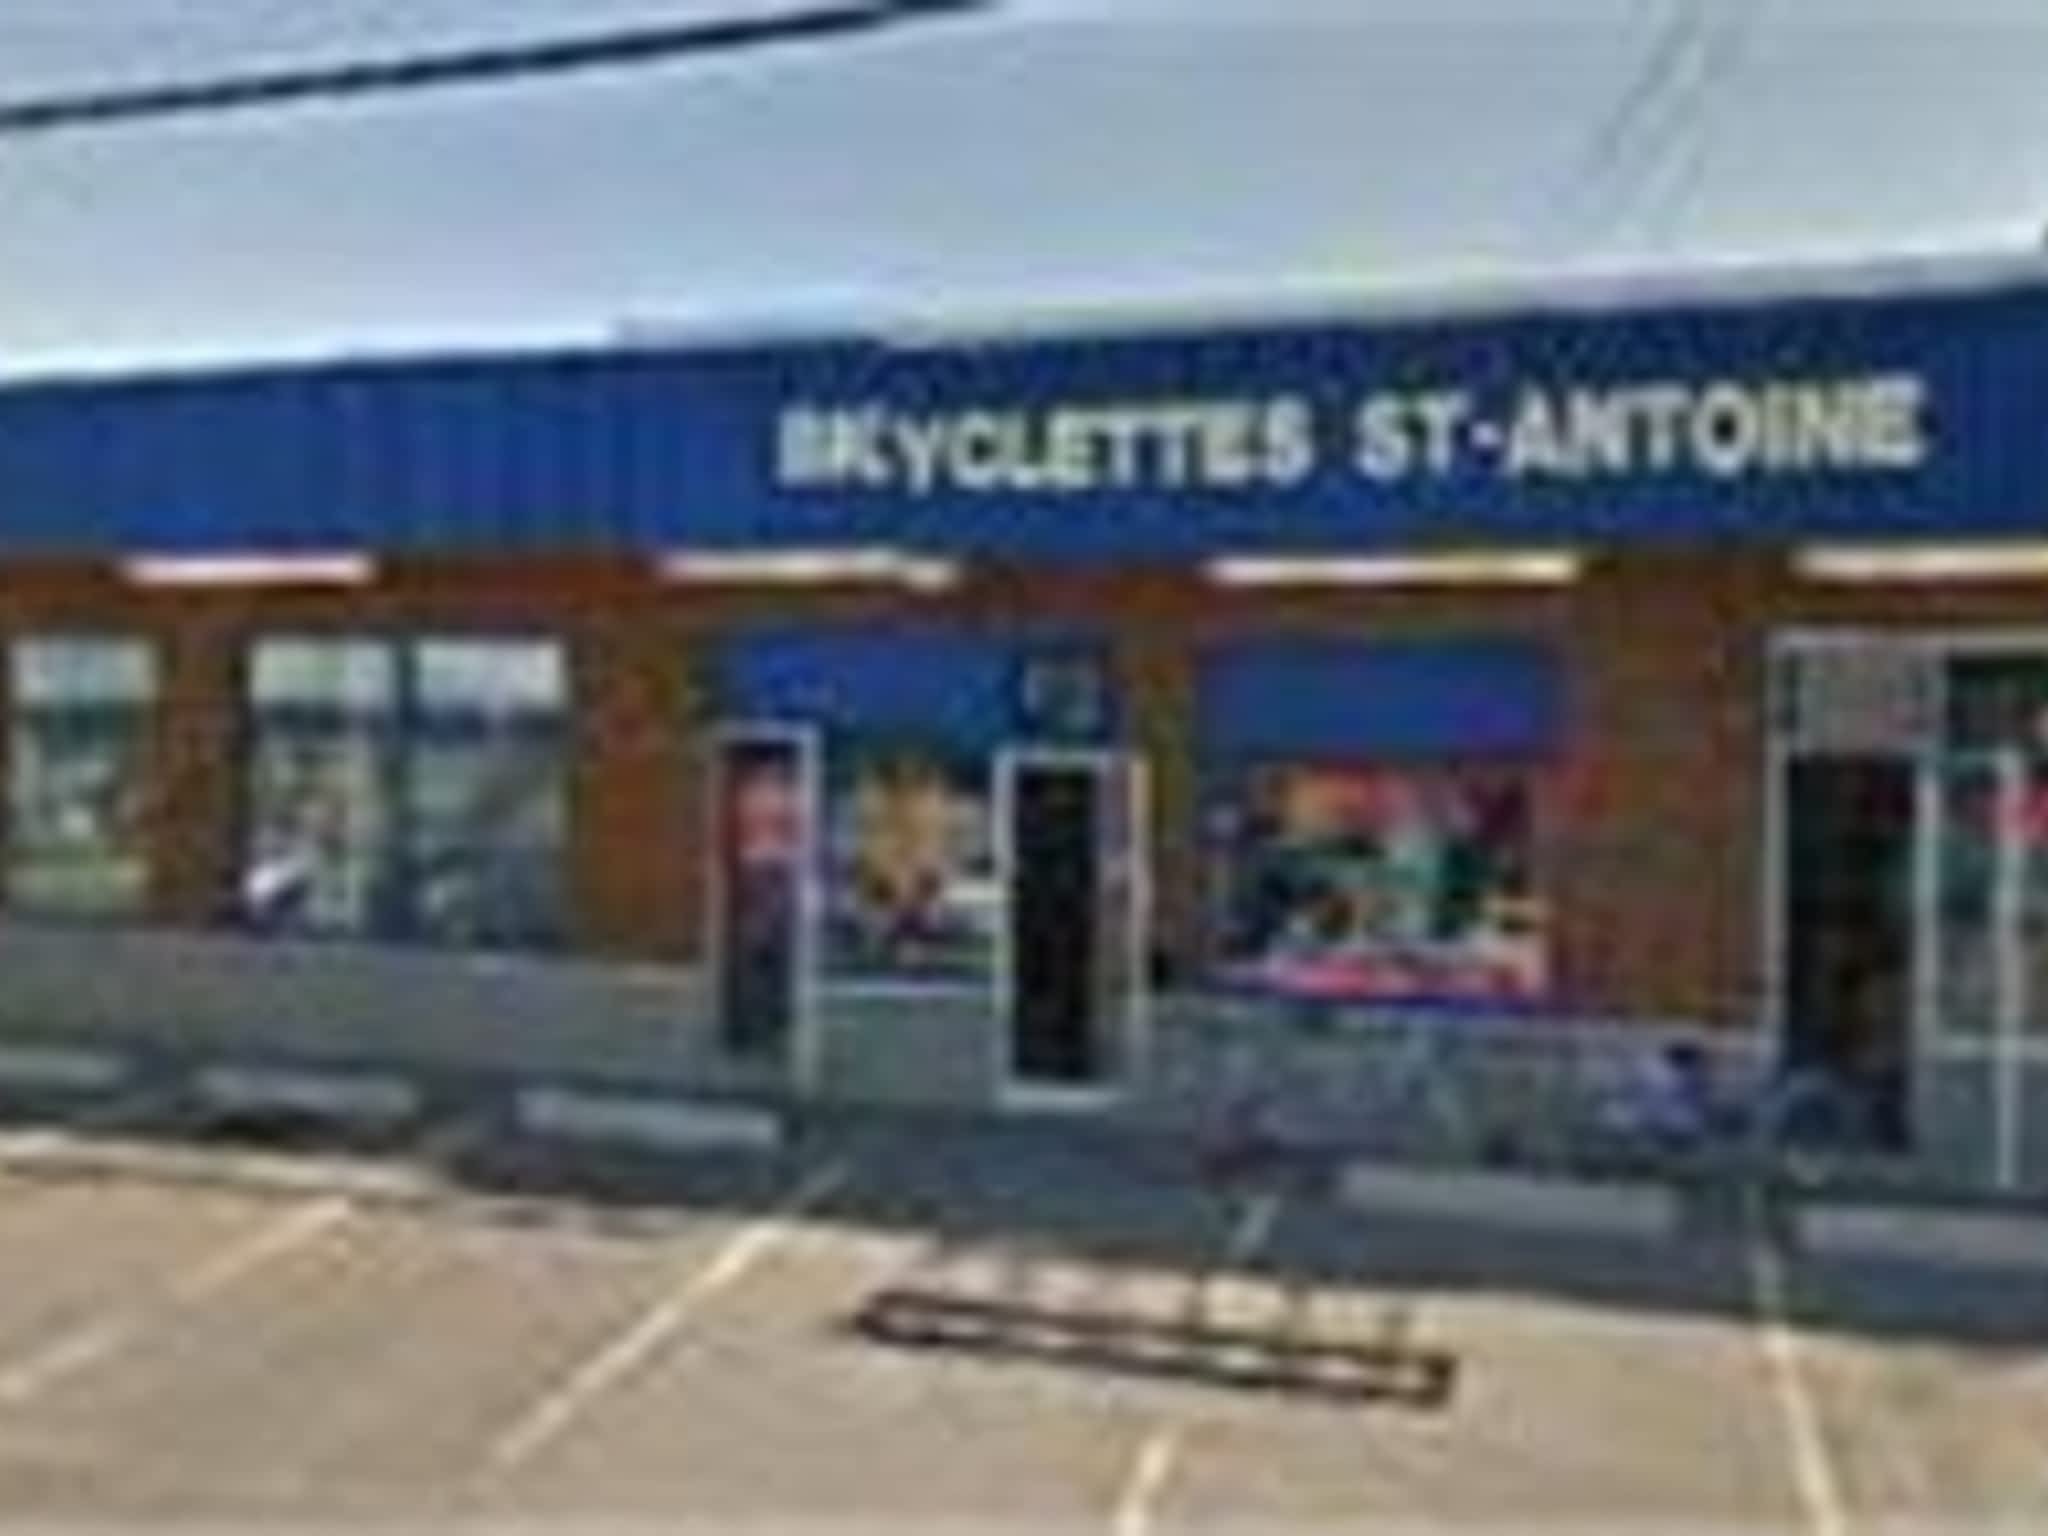 photo Bicyclettes St-Antoine Inc